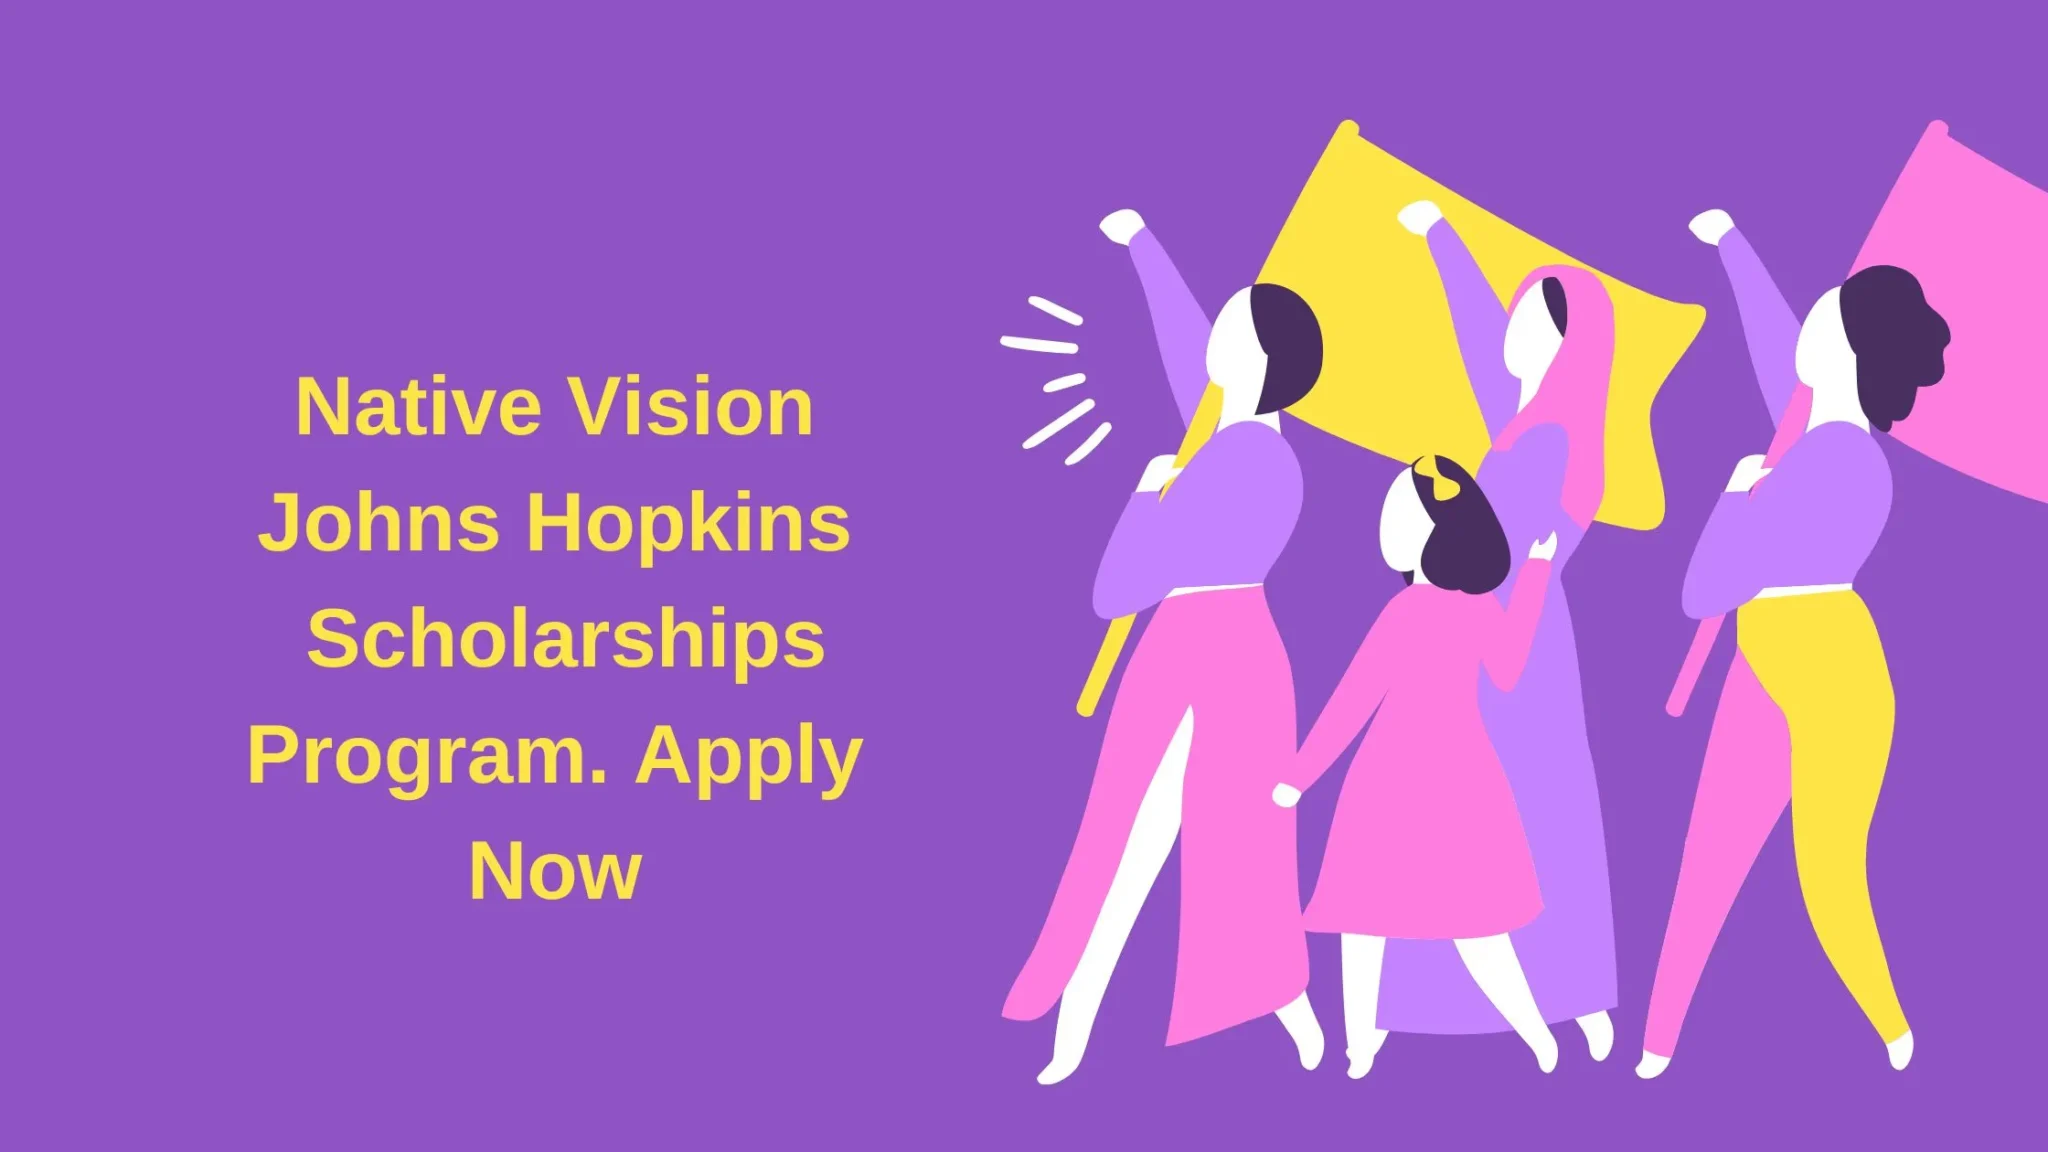 Native Vision Johns Hopkins Scholarships Program